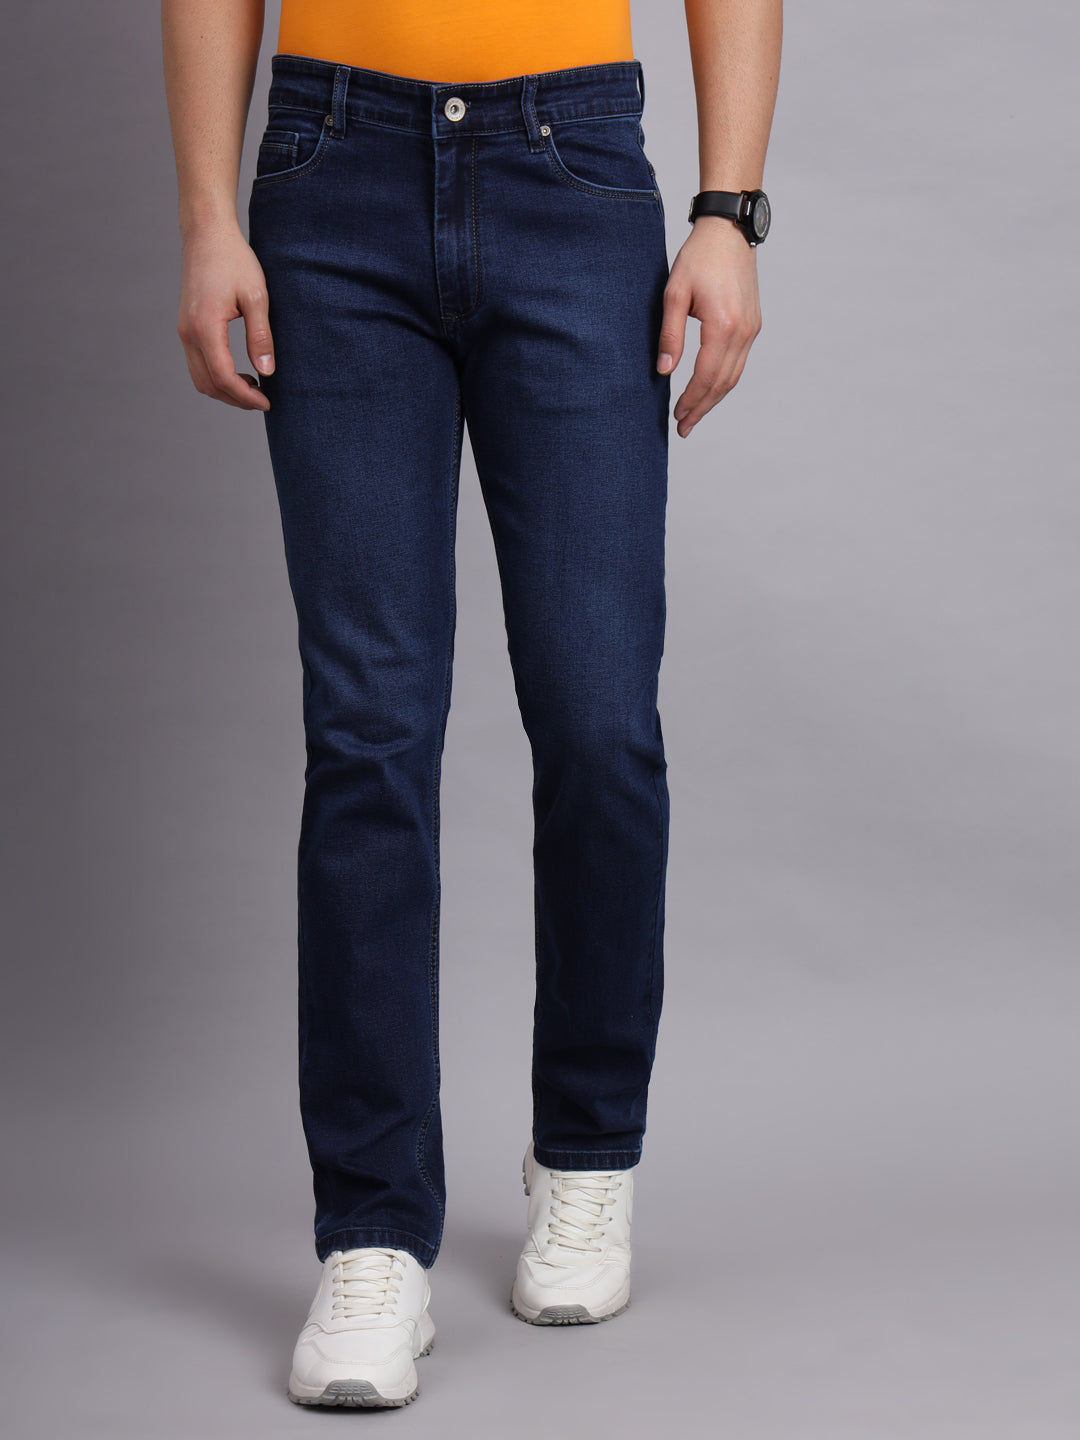 Premium Men's Dark Navy Jeans Straight Fit with Stretch Comfort